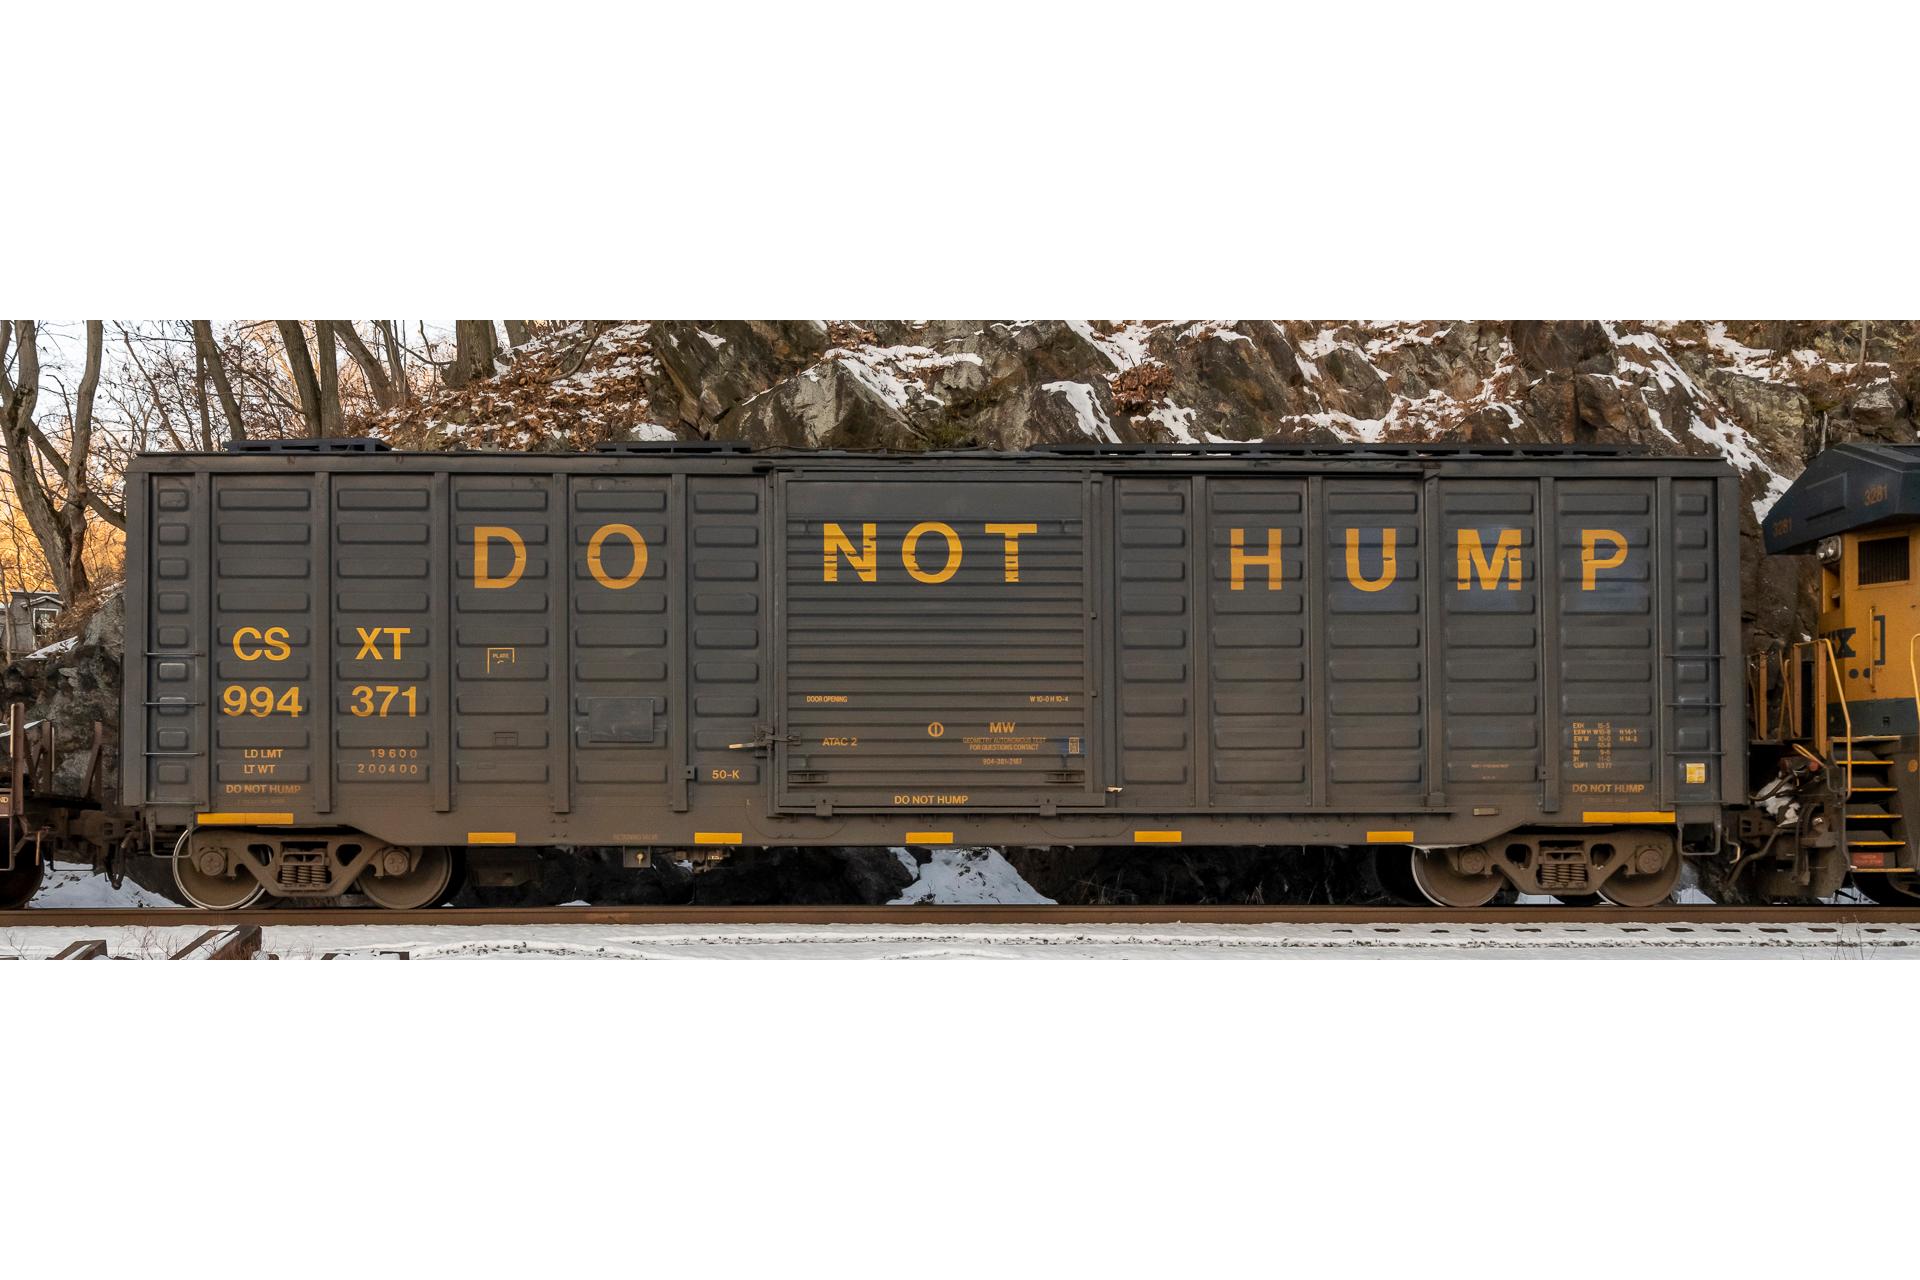 Stephen Mallon Figurative Photograph - "Boxcar CSXT 994 371" Contemporary Freight Train photograph, do not hump text